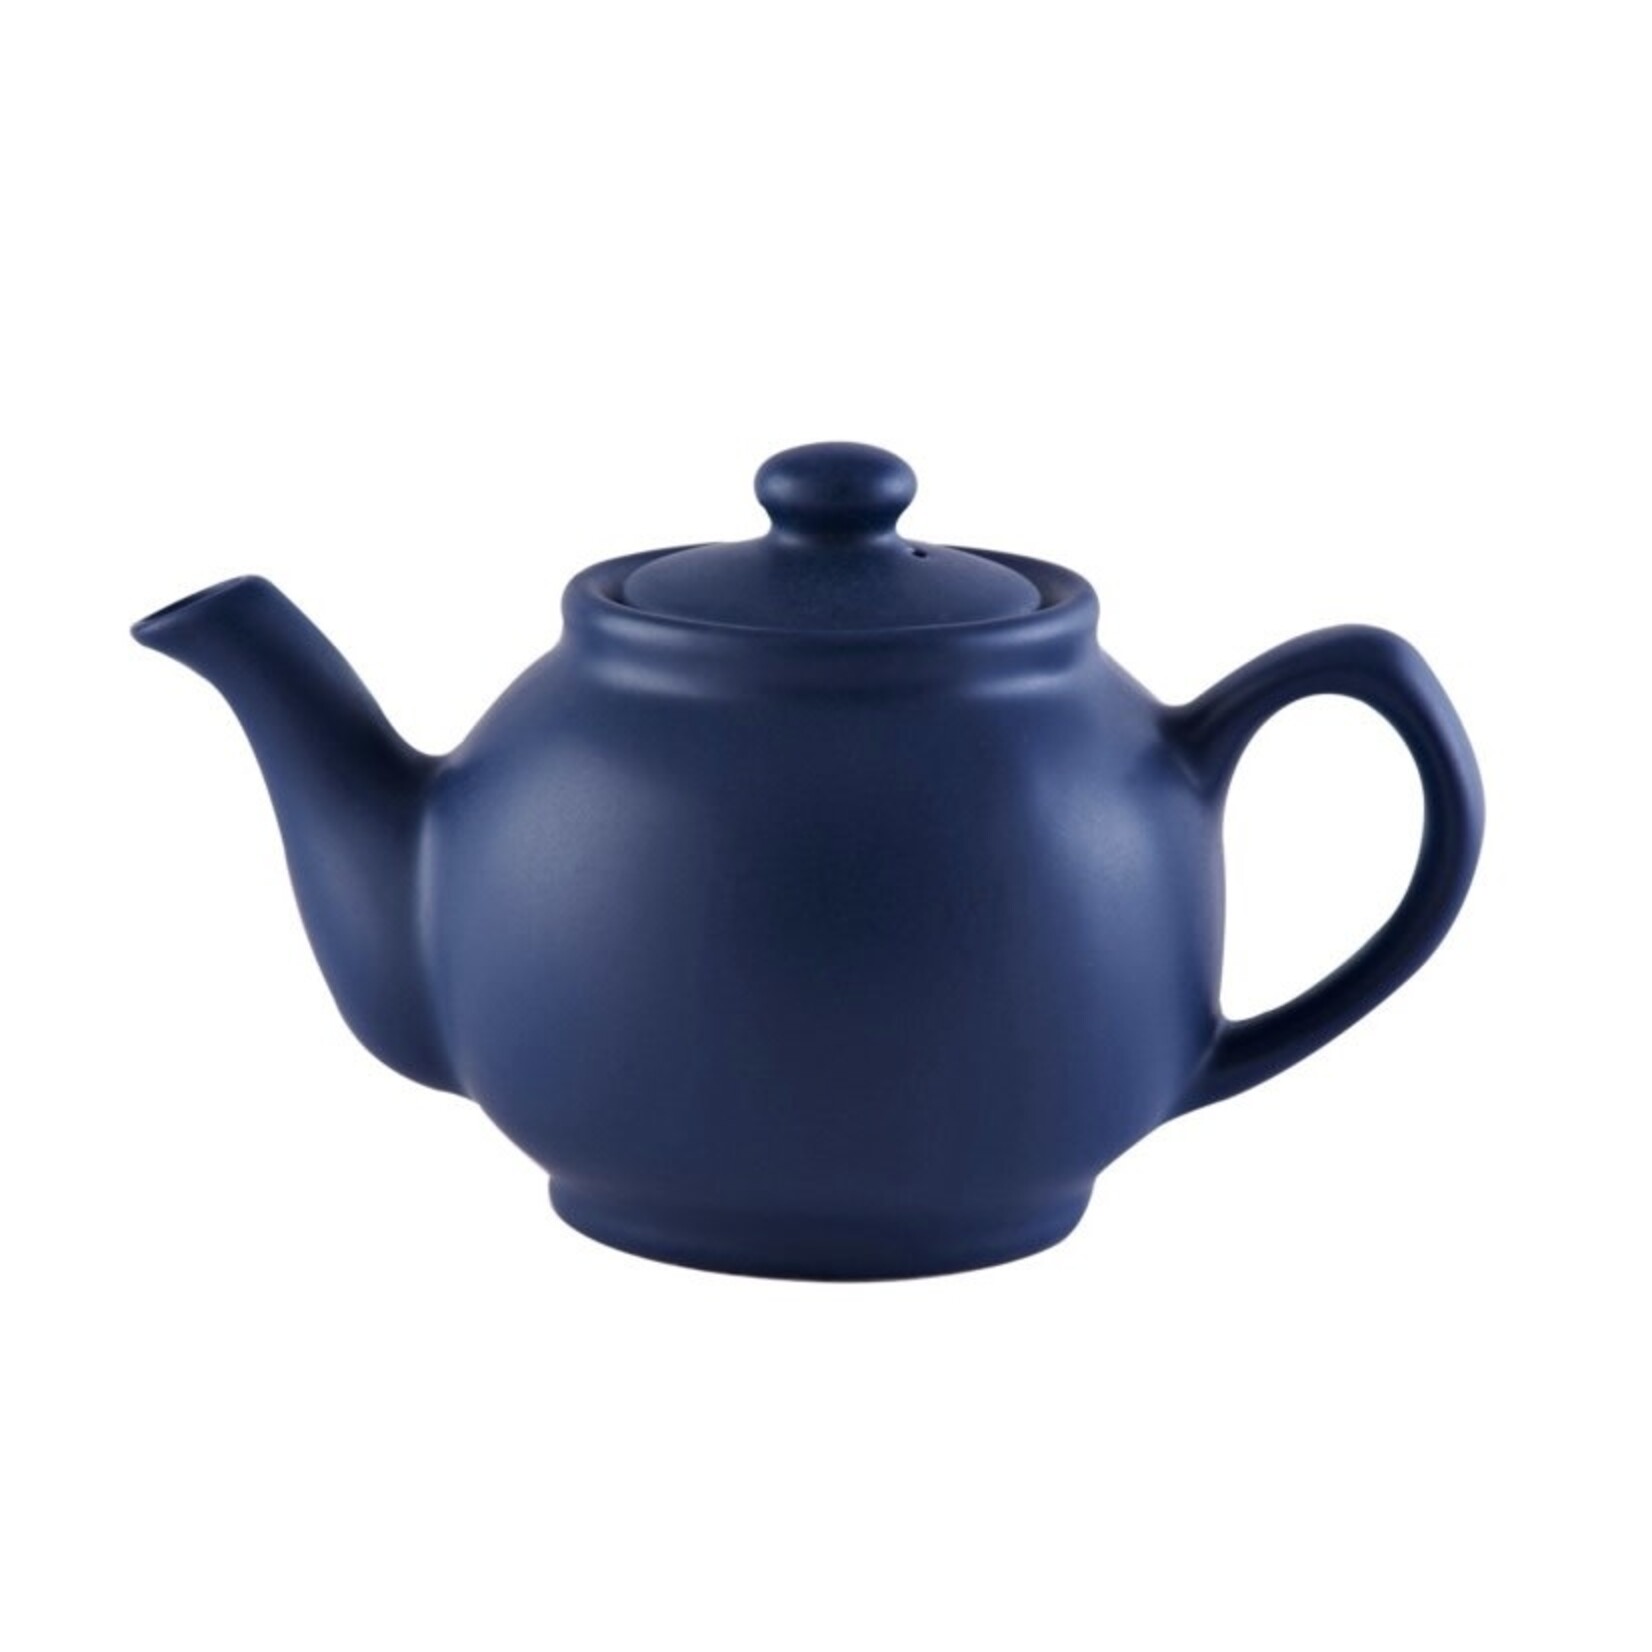 PRICE & KENSINGTON PRICE & KENSINGTON Matte Teapot 2 Cup - Navy